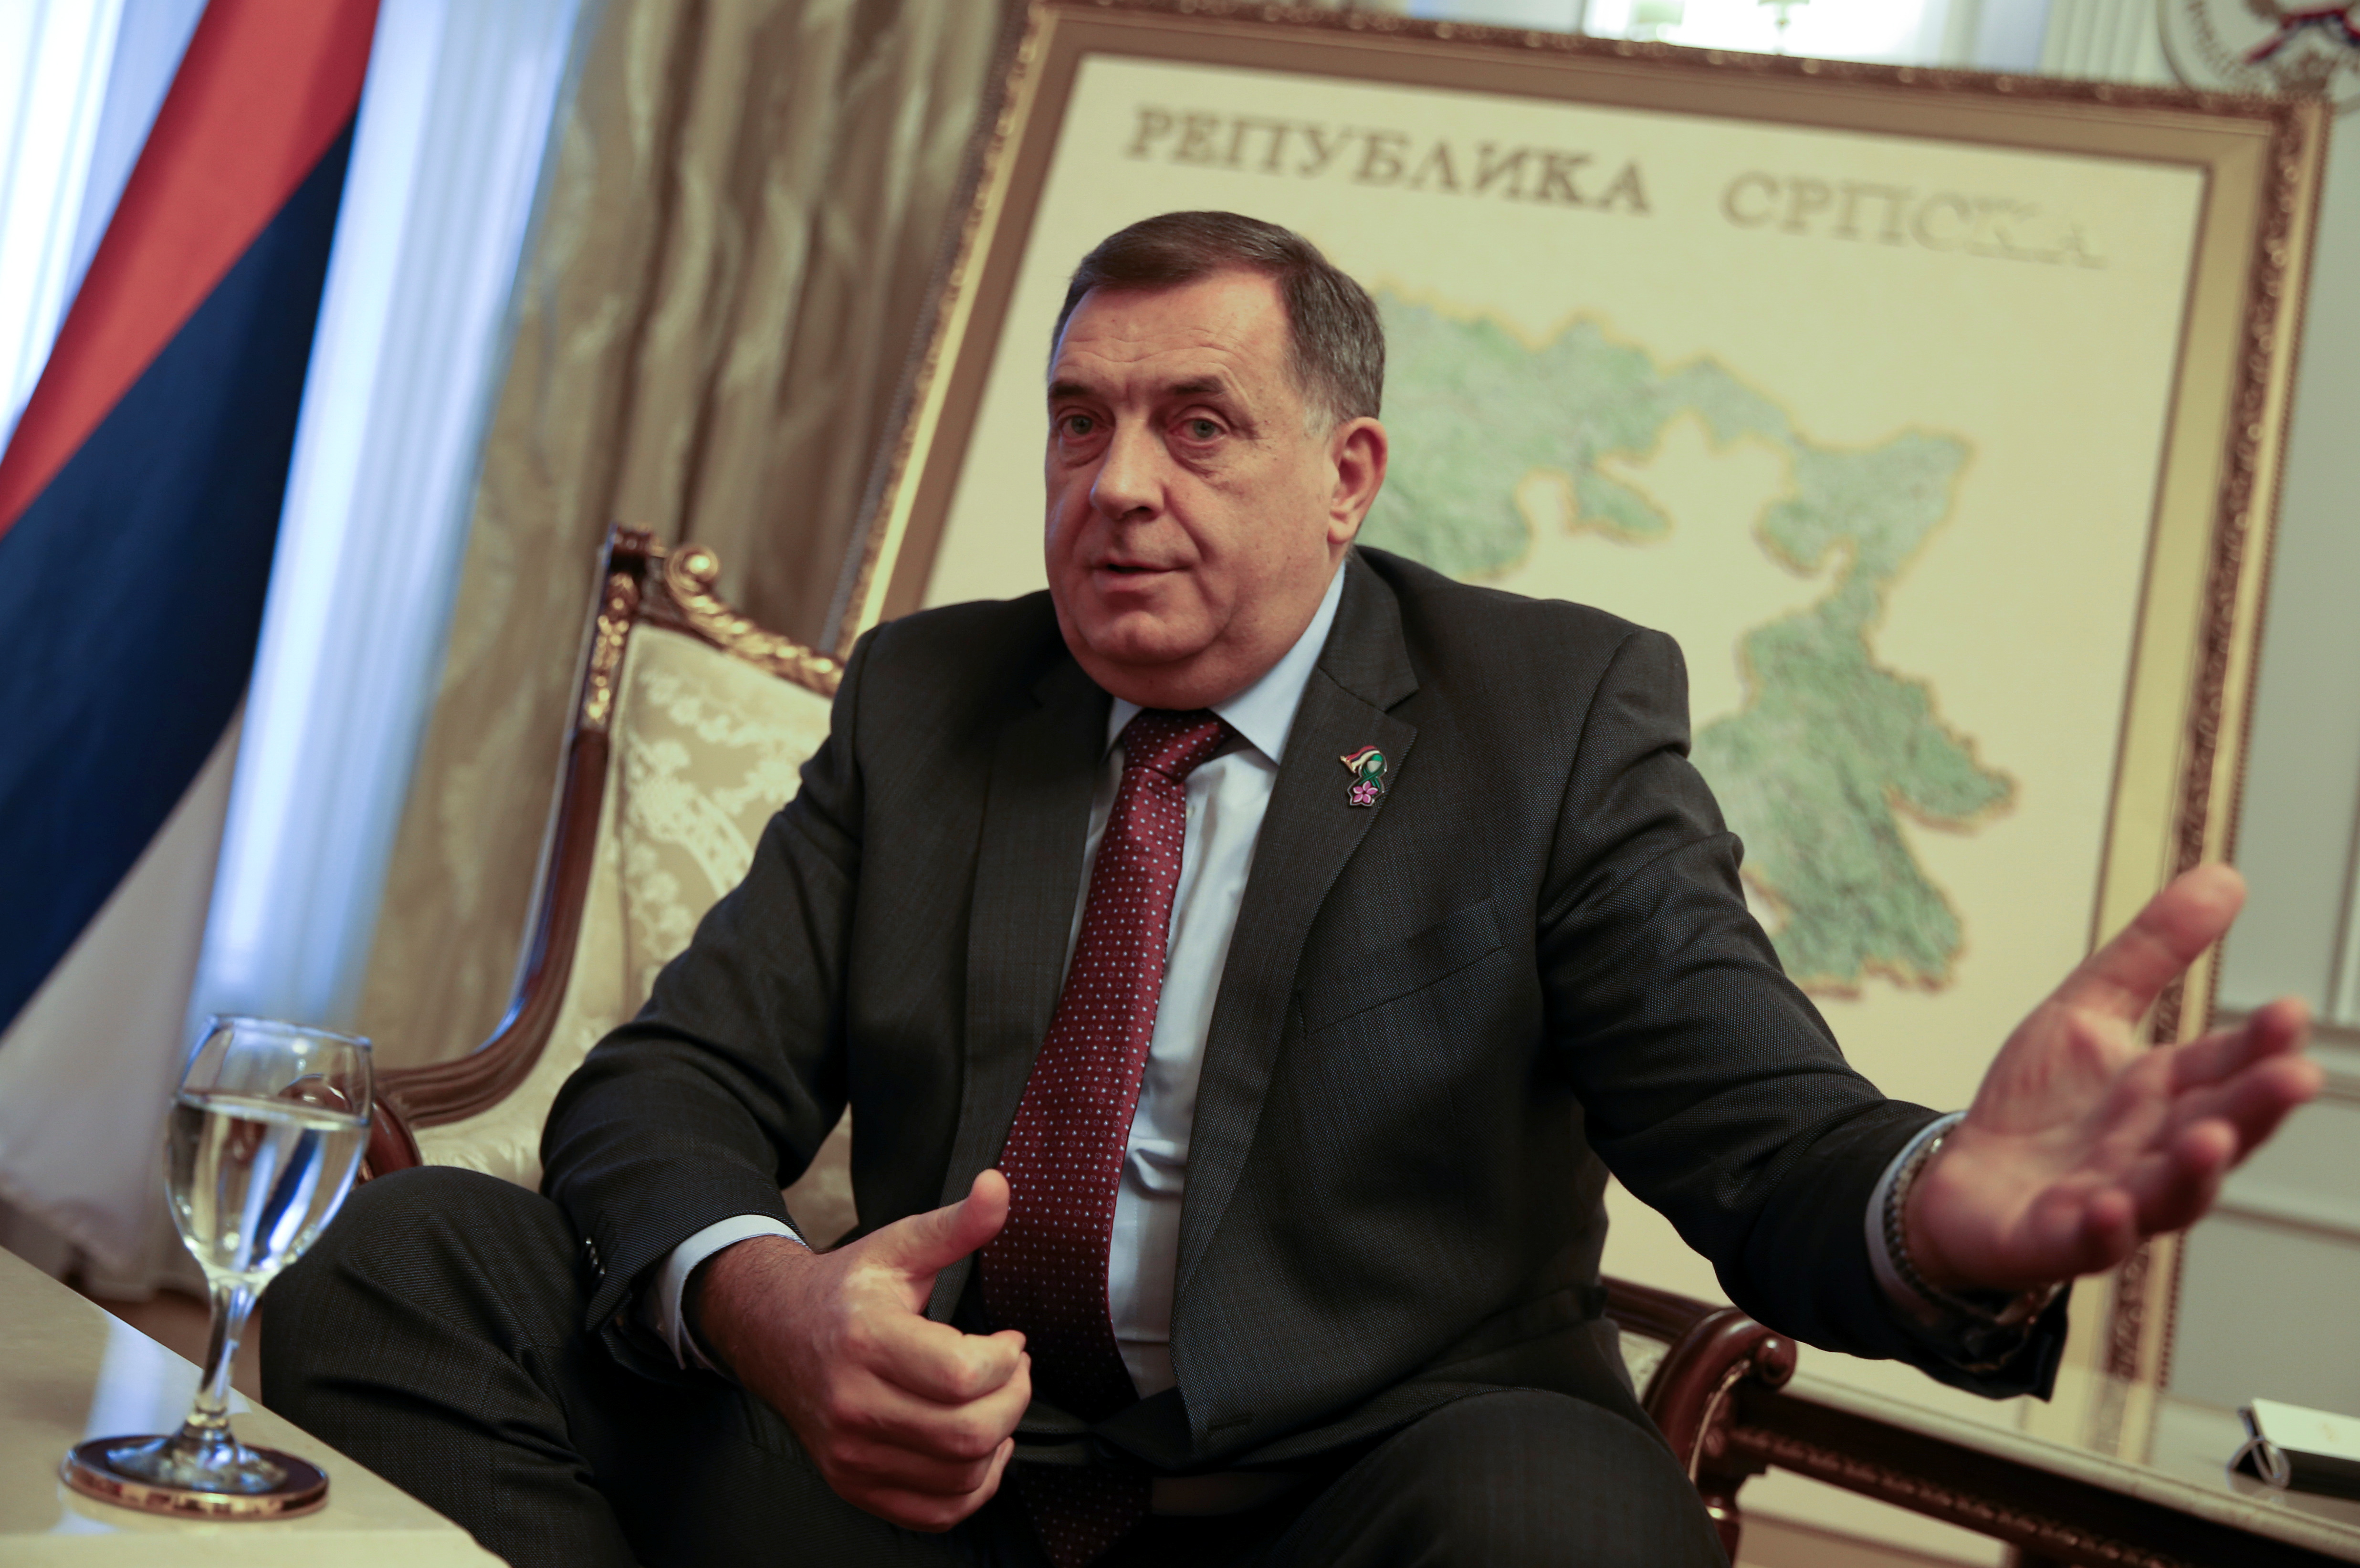 Milorad Dodik, Serb member of the Presidency of Bosnia and Herzegovina, speaks during an interview in Banja Luka